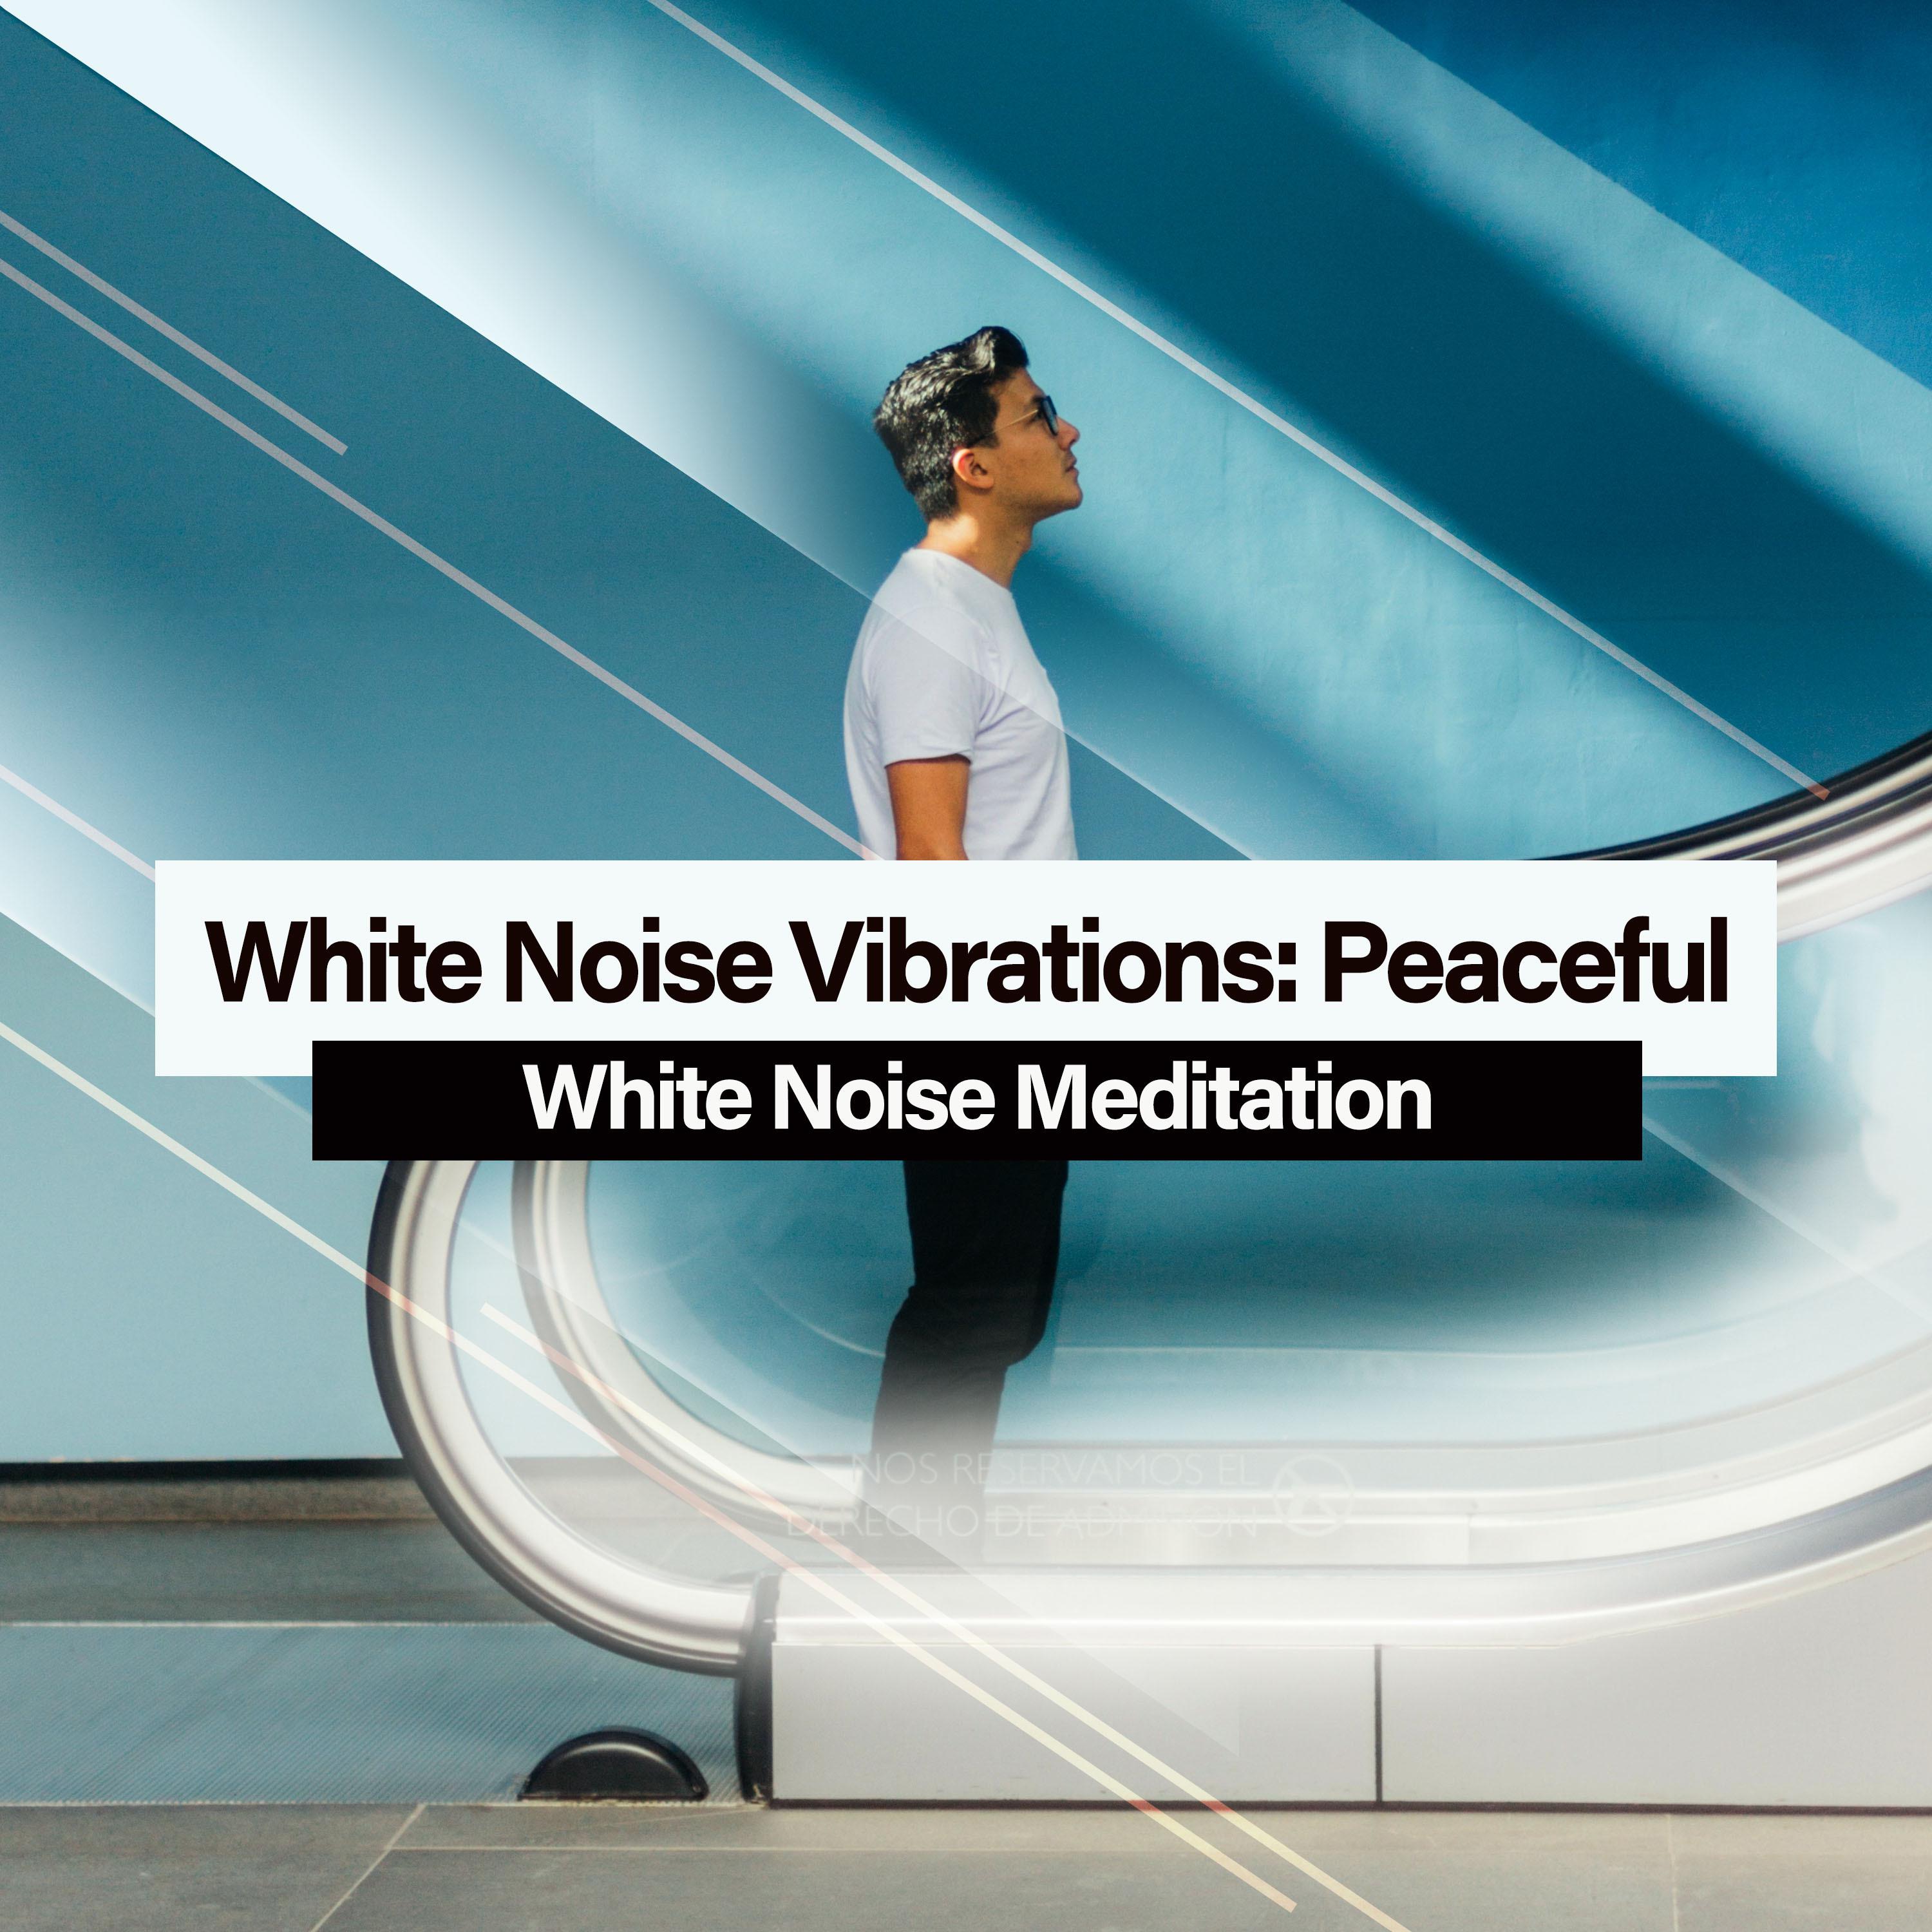 White Noise Vibrations: Peaceful